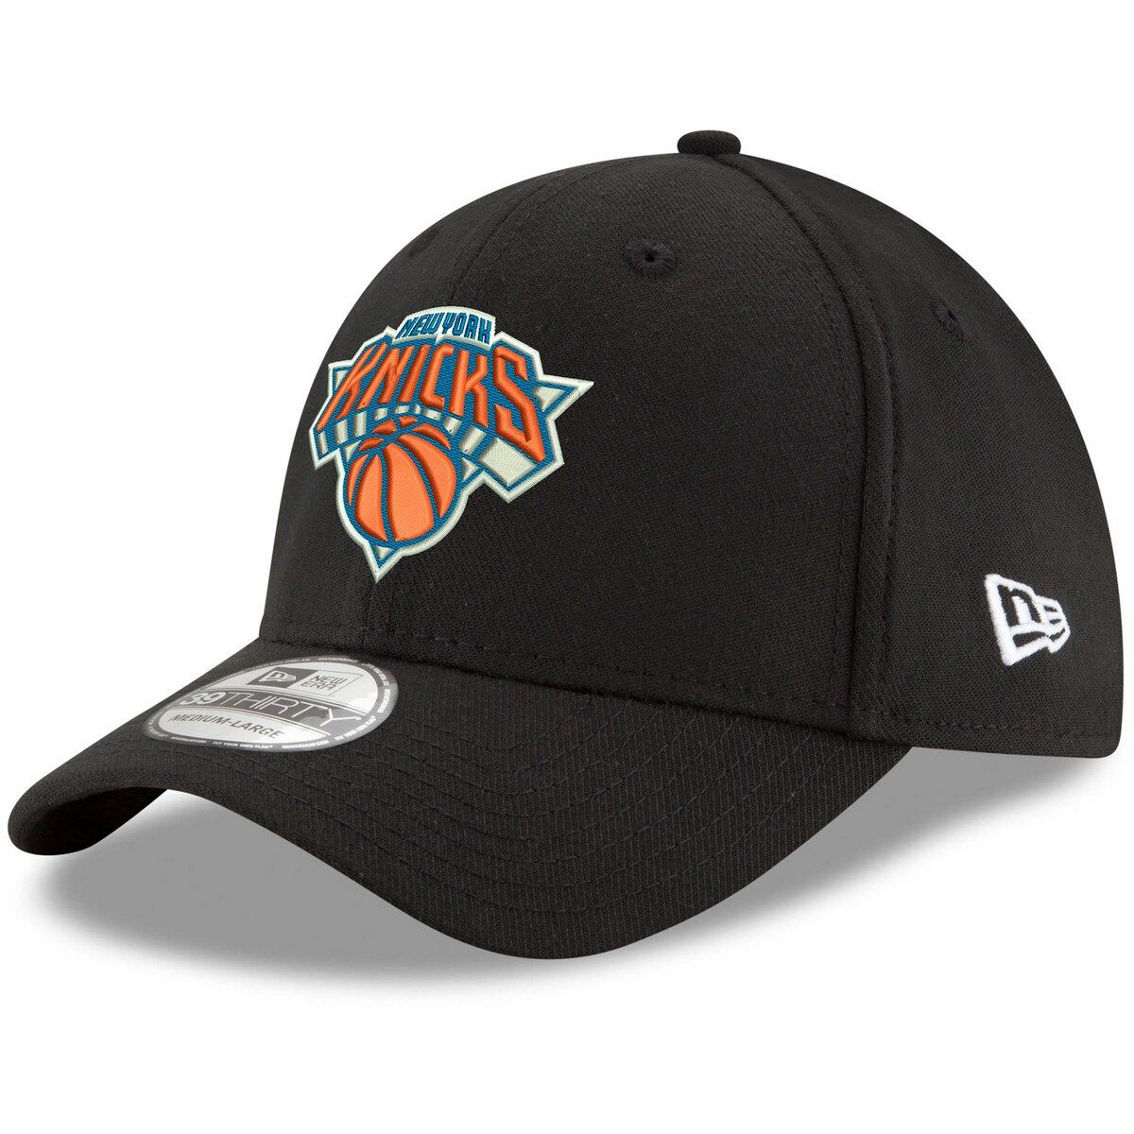 New Era Men's Black New York Knicks Official Team Color 39THIRTY Flex Hat - Image 2 of 4